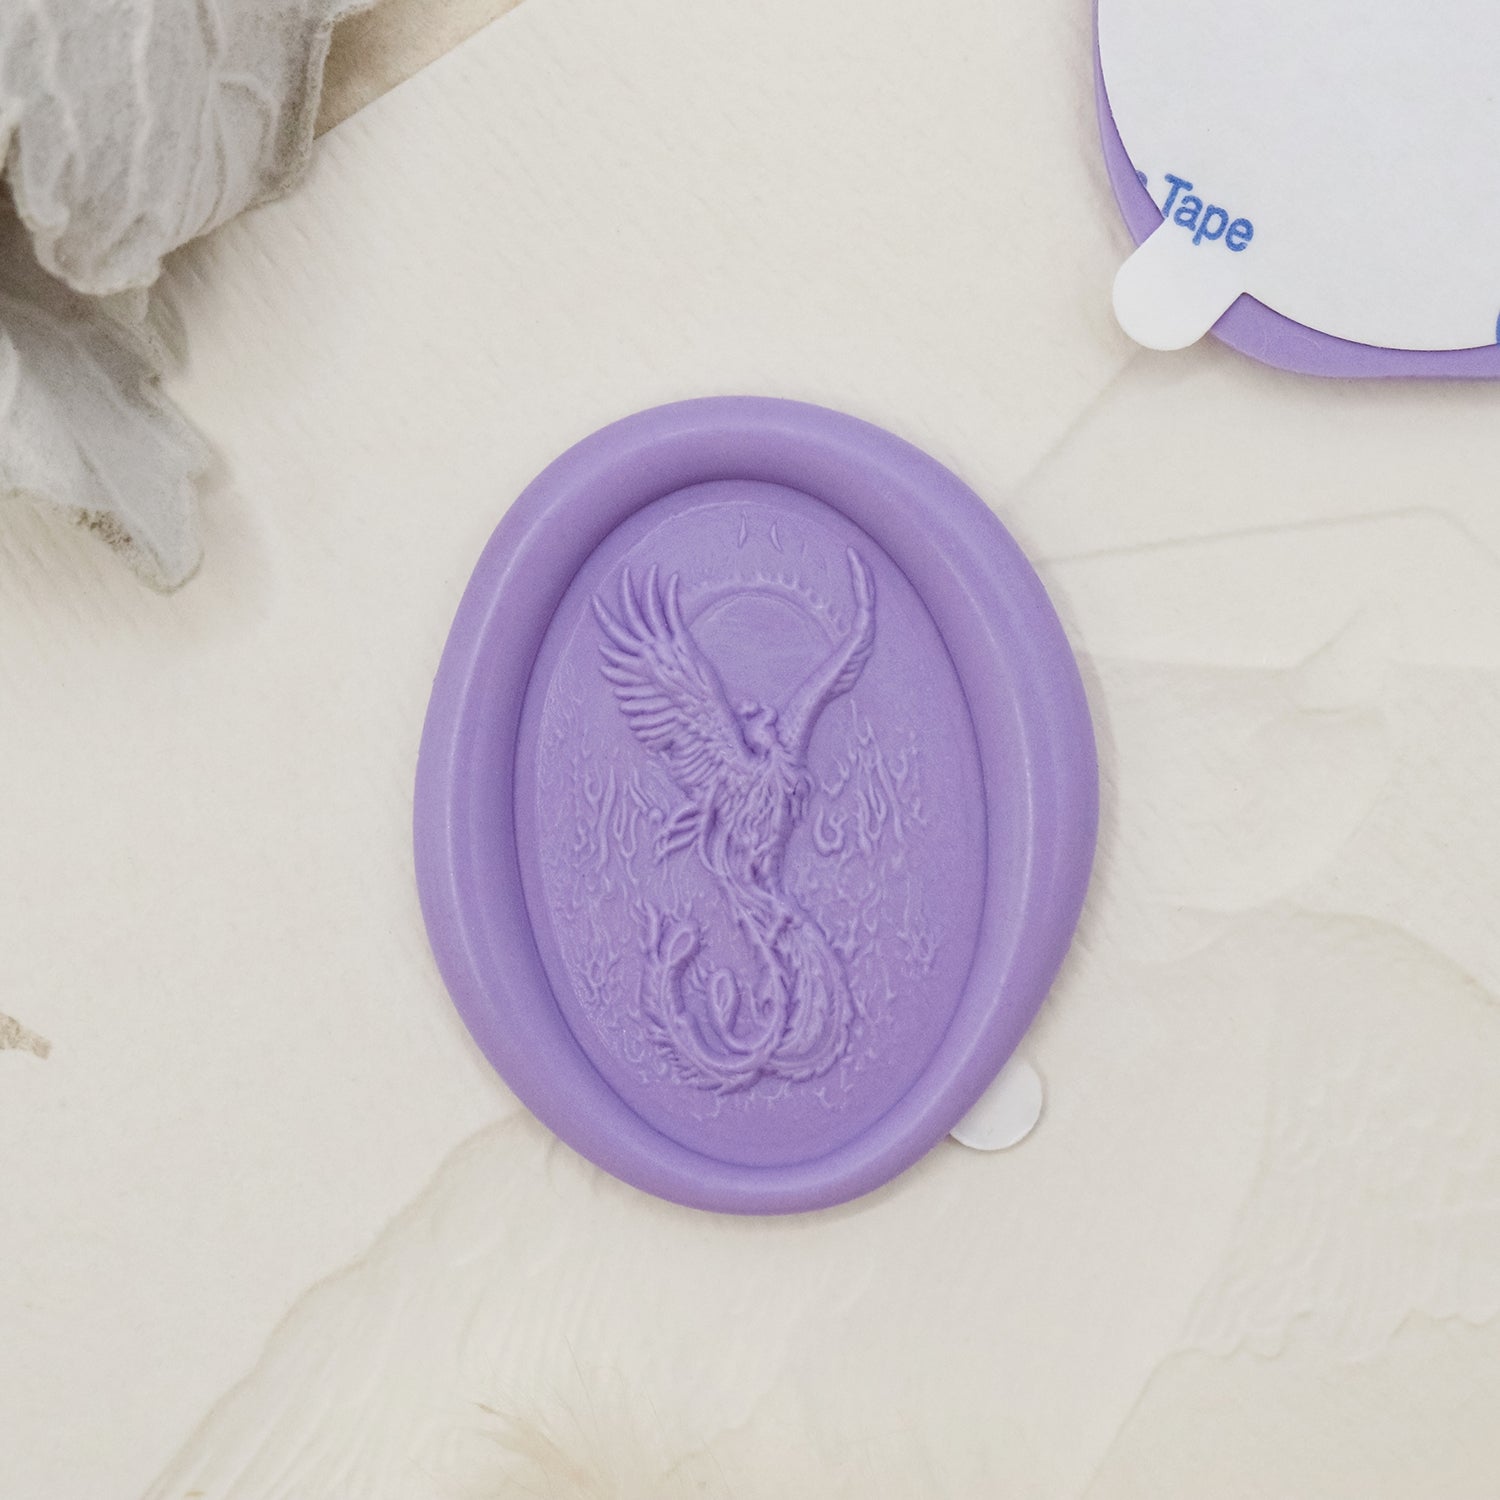 Stamprints 3D Relief Phoenix Self-adhesive Wax Seal Stickers 1